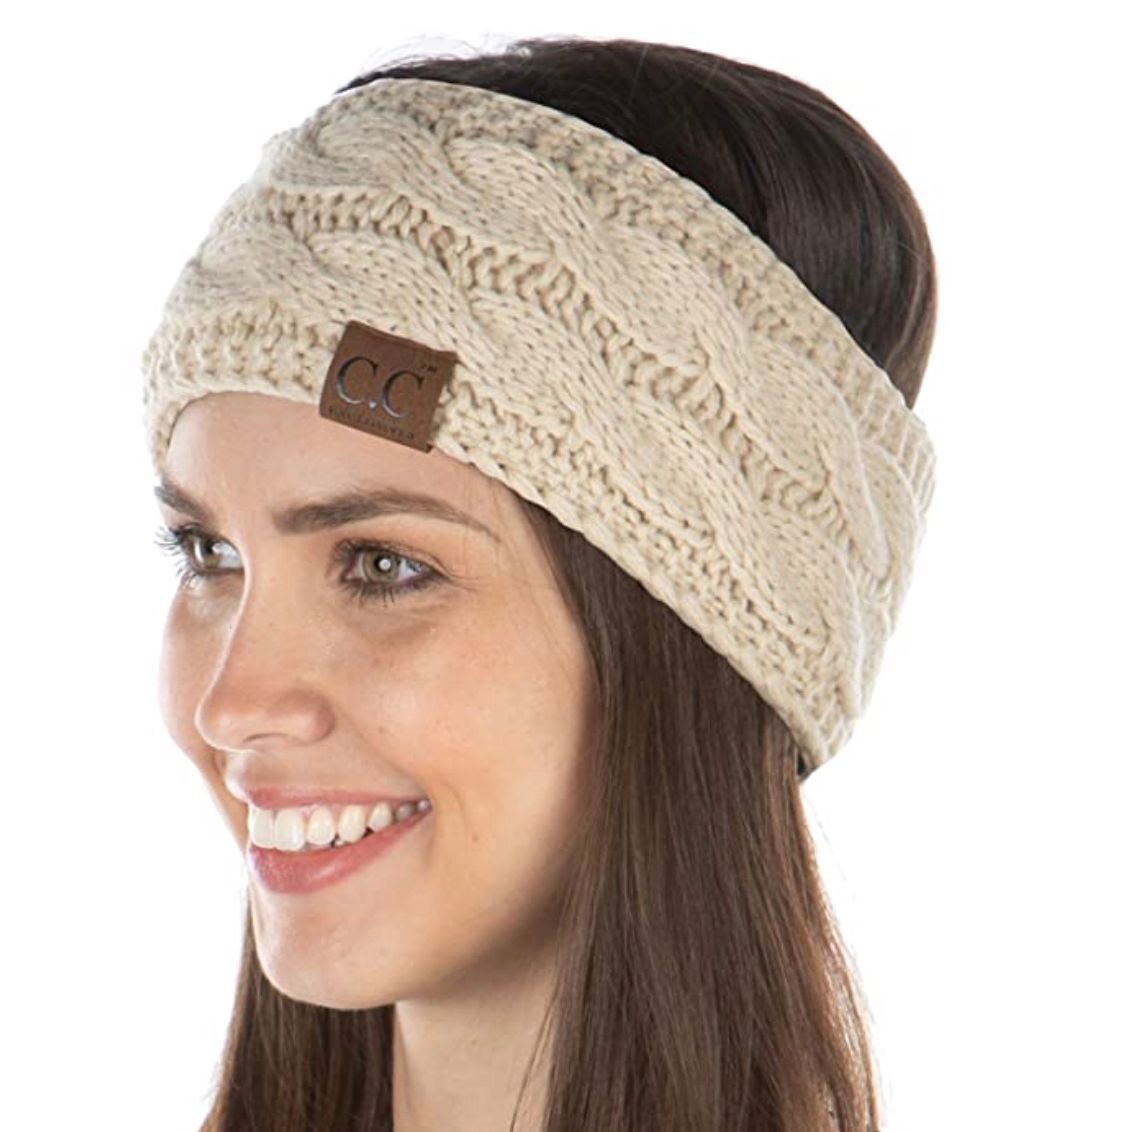 Winter Ear Warmer Headbands for Women Soft Stretch Fuzzy Cable Knit Head Wrap Fleece Lined Hair Accessories Sport Hairband 